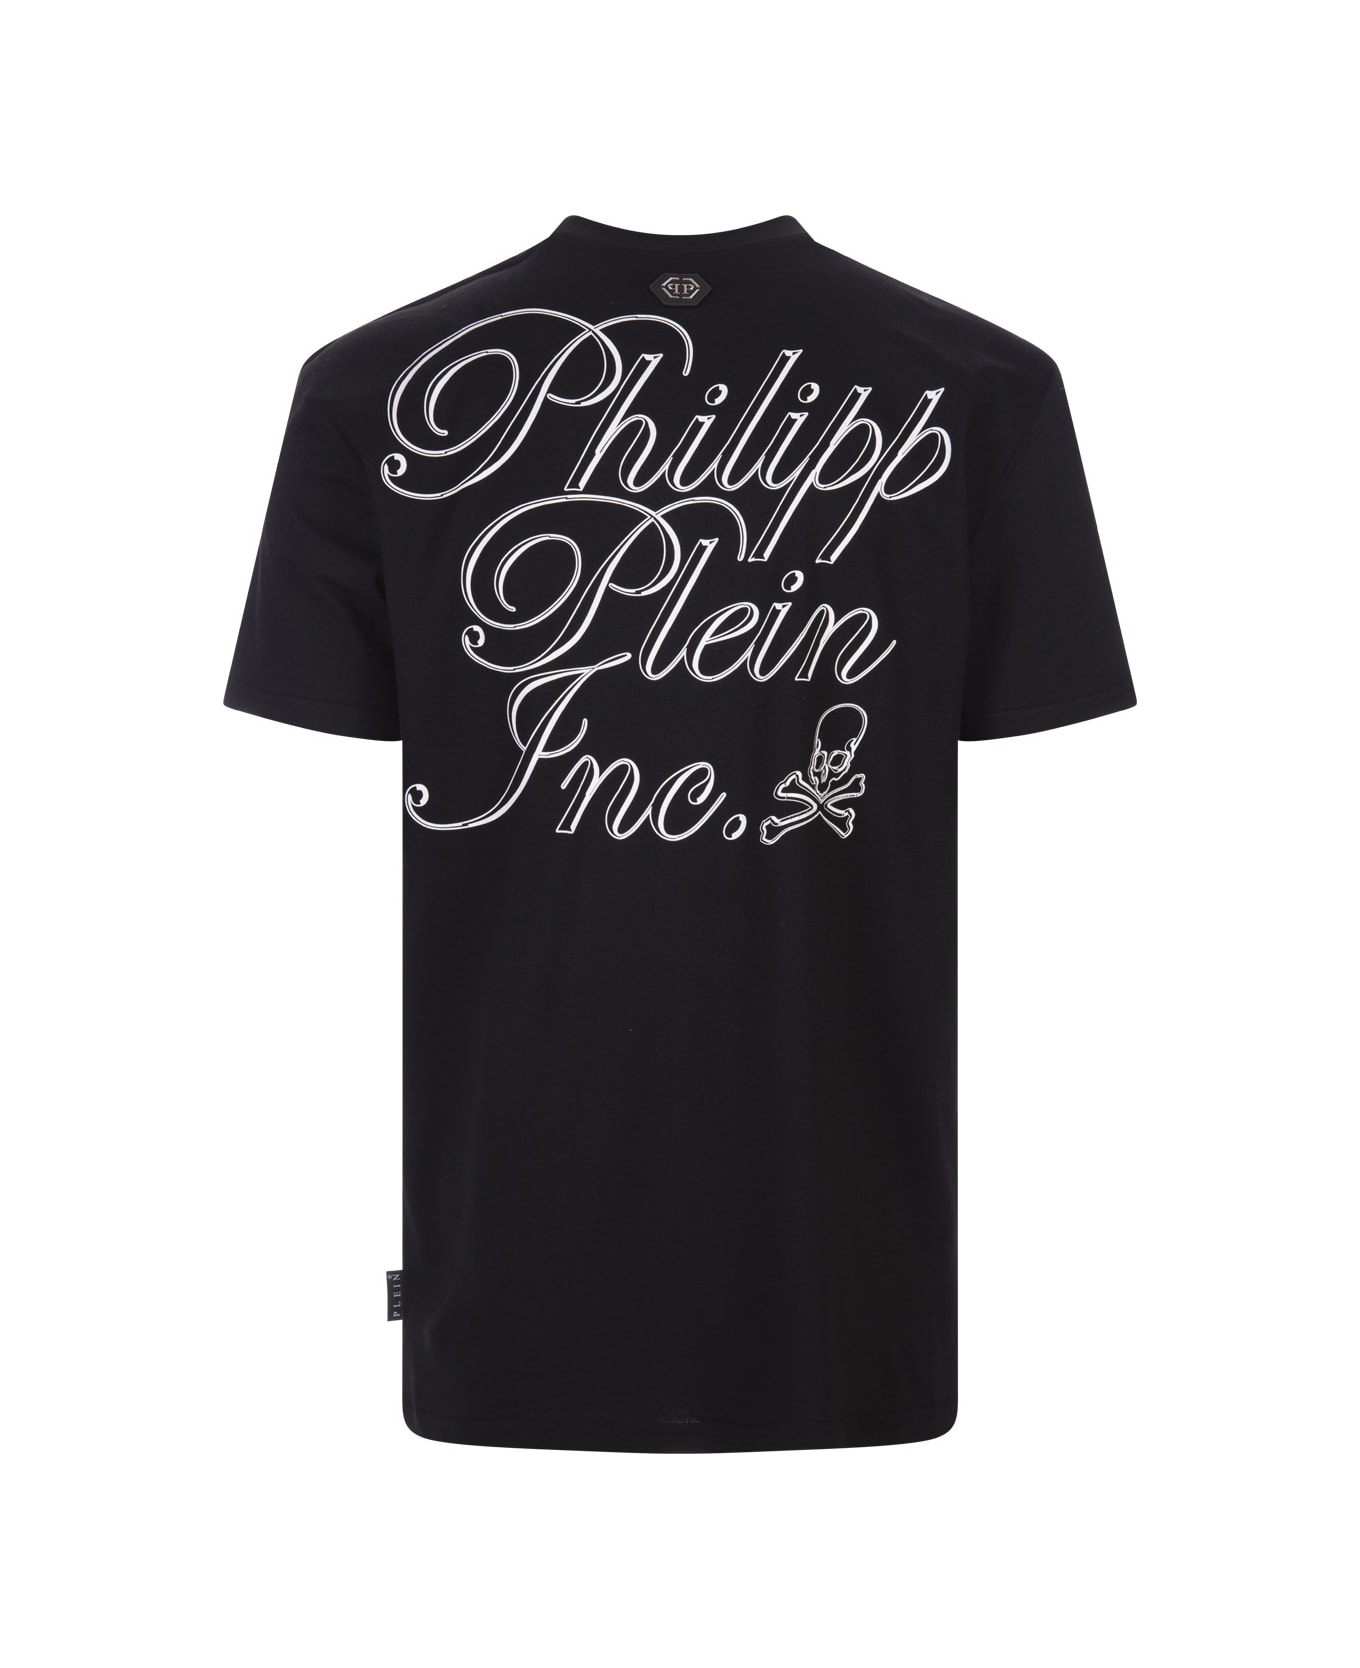 Philipp Plein Black T-shirt With Philipp Plein Tm Print On Front And Back - Black